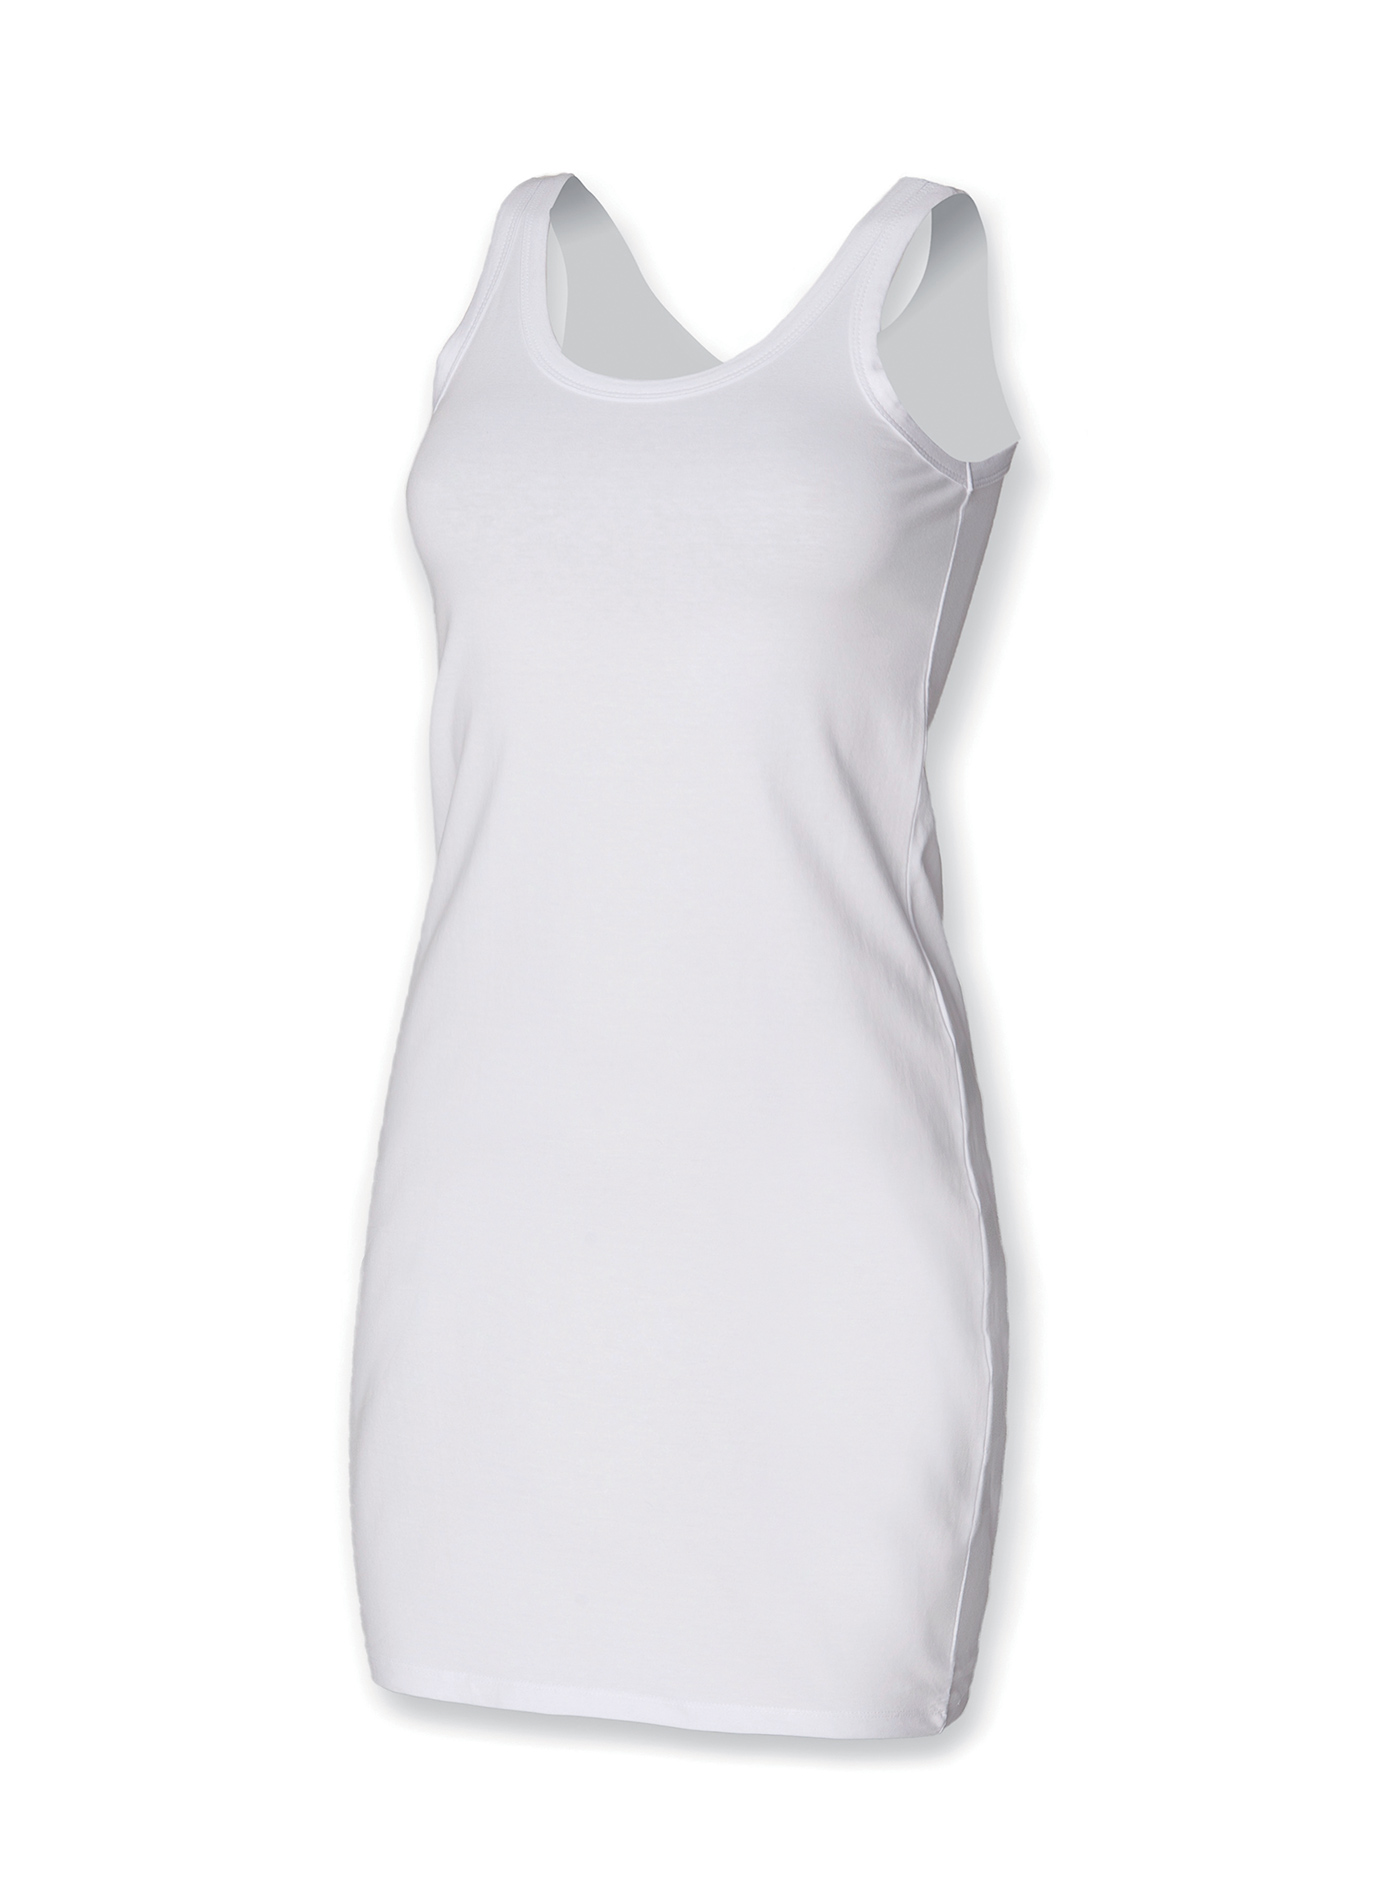 Dámské strečové šaty Skinnifit - Bílá XL